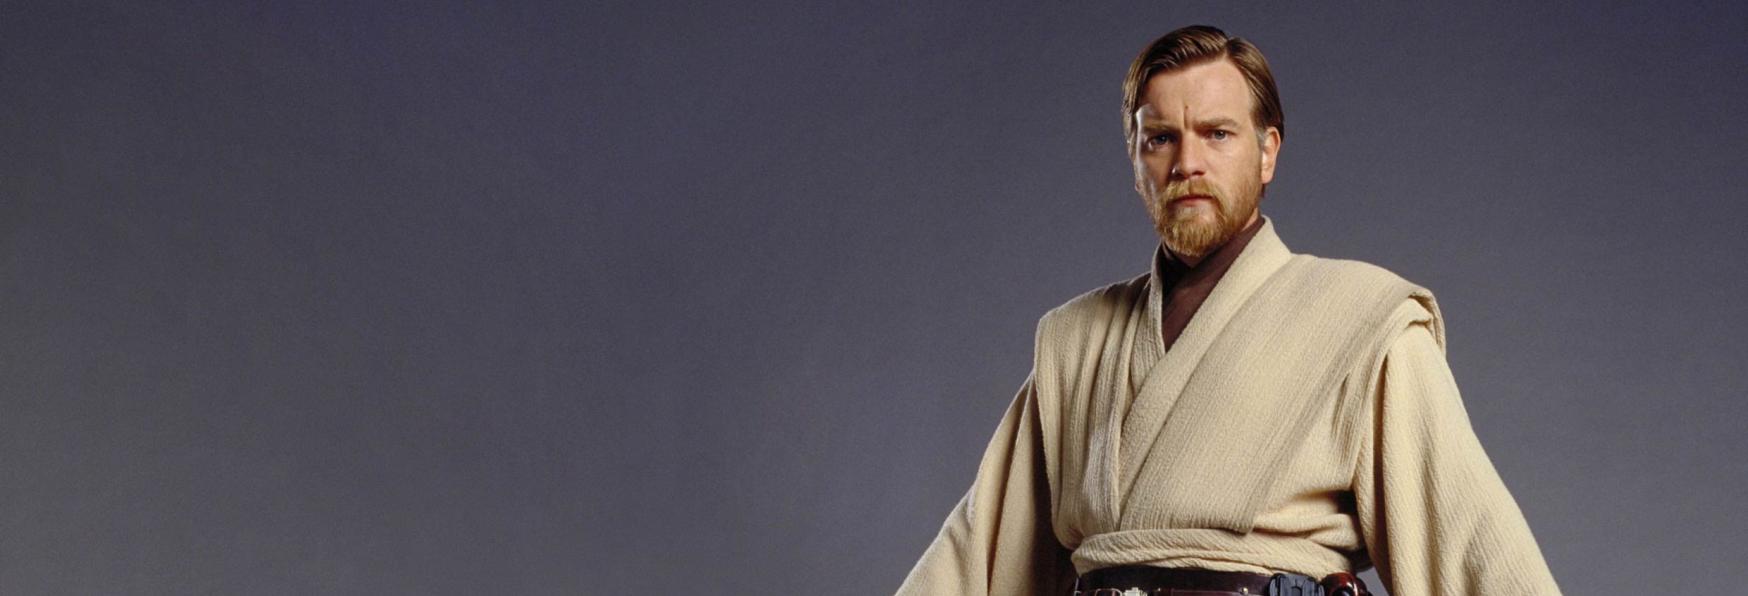 Star Wars: Kenobi - Lucasfilm conferma che sarà una Serie Limitata su Disney 